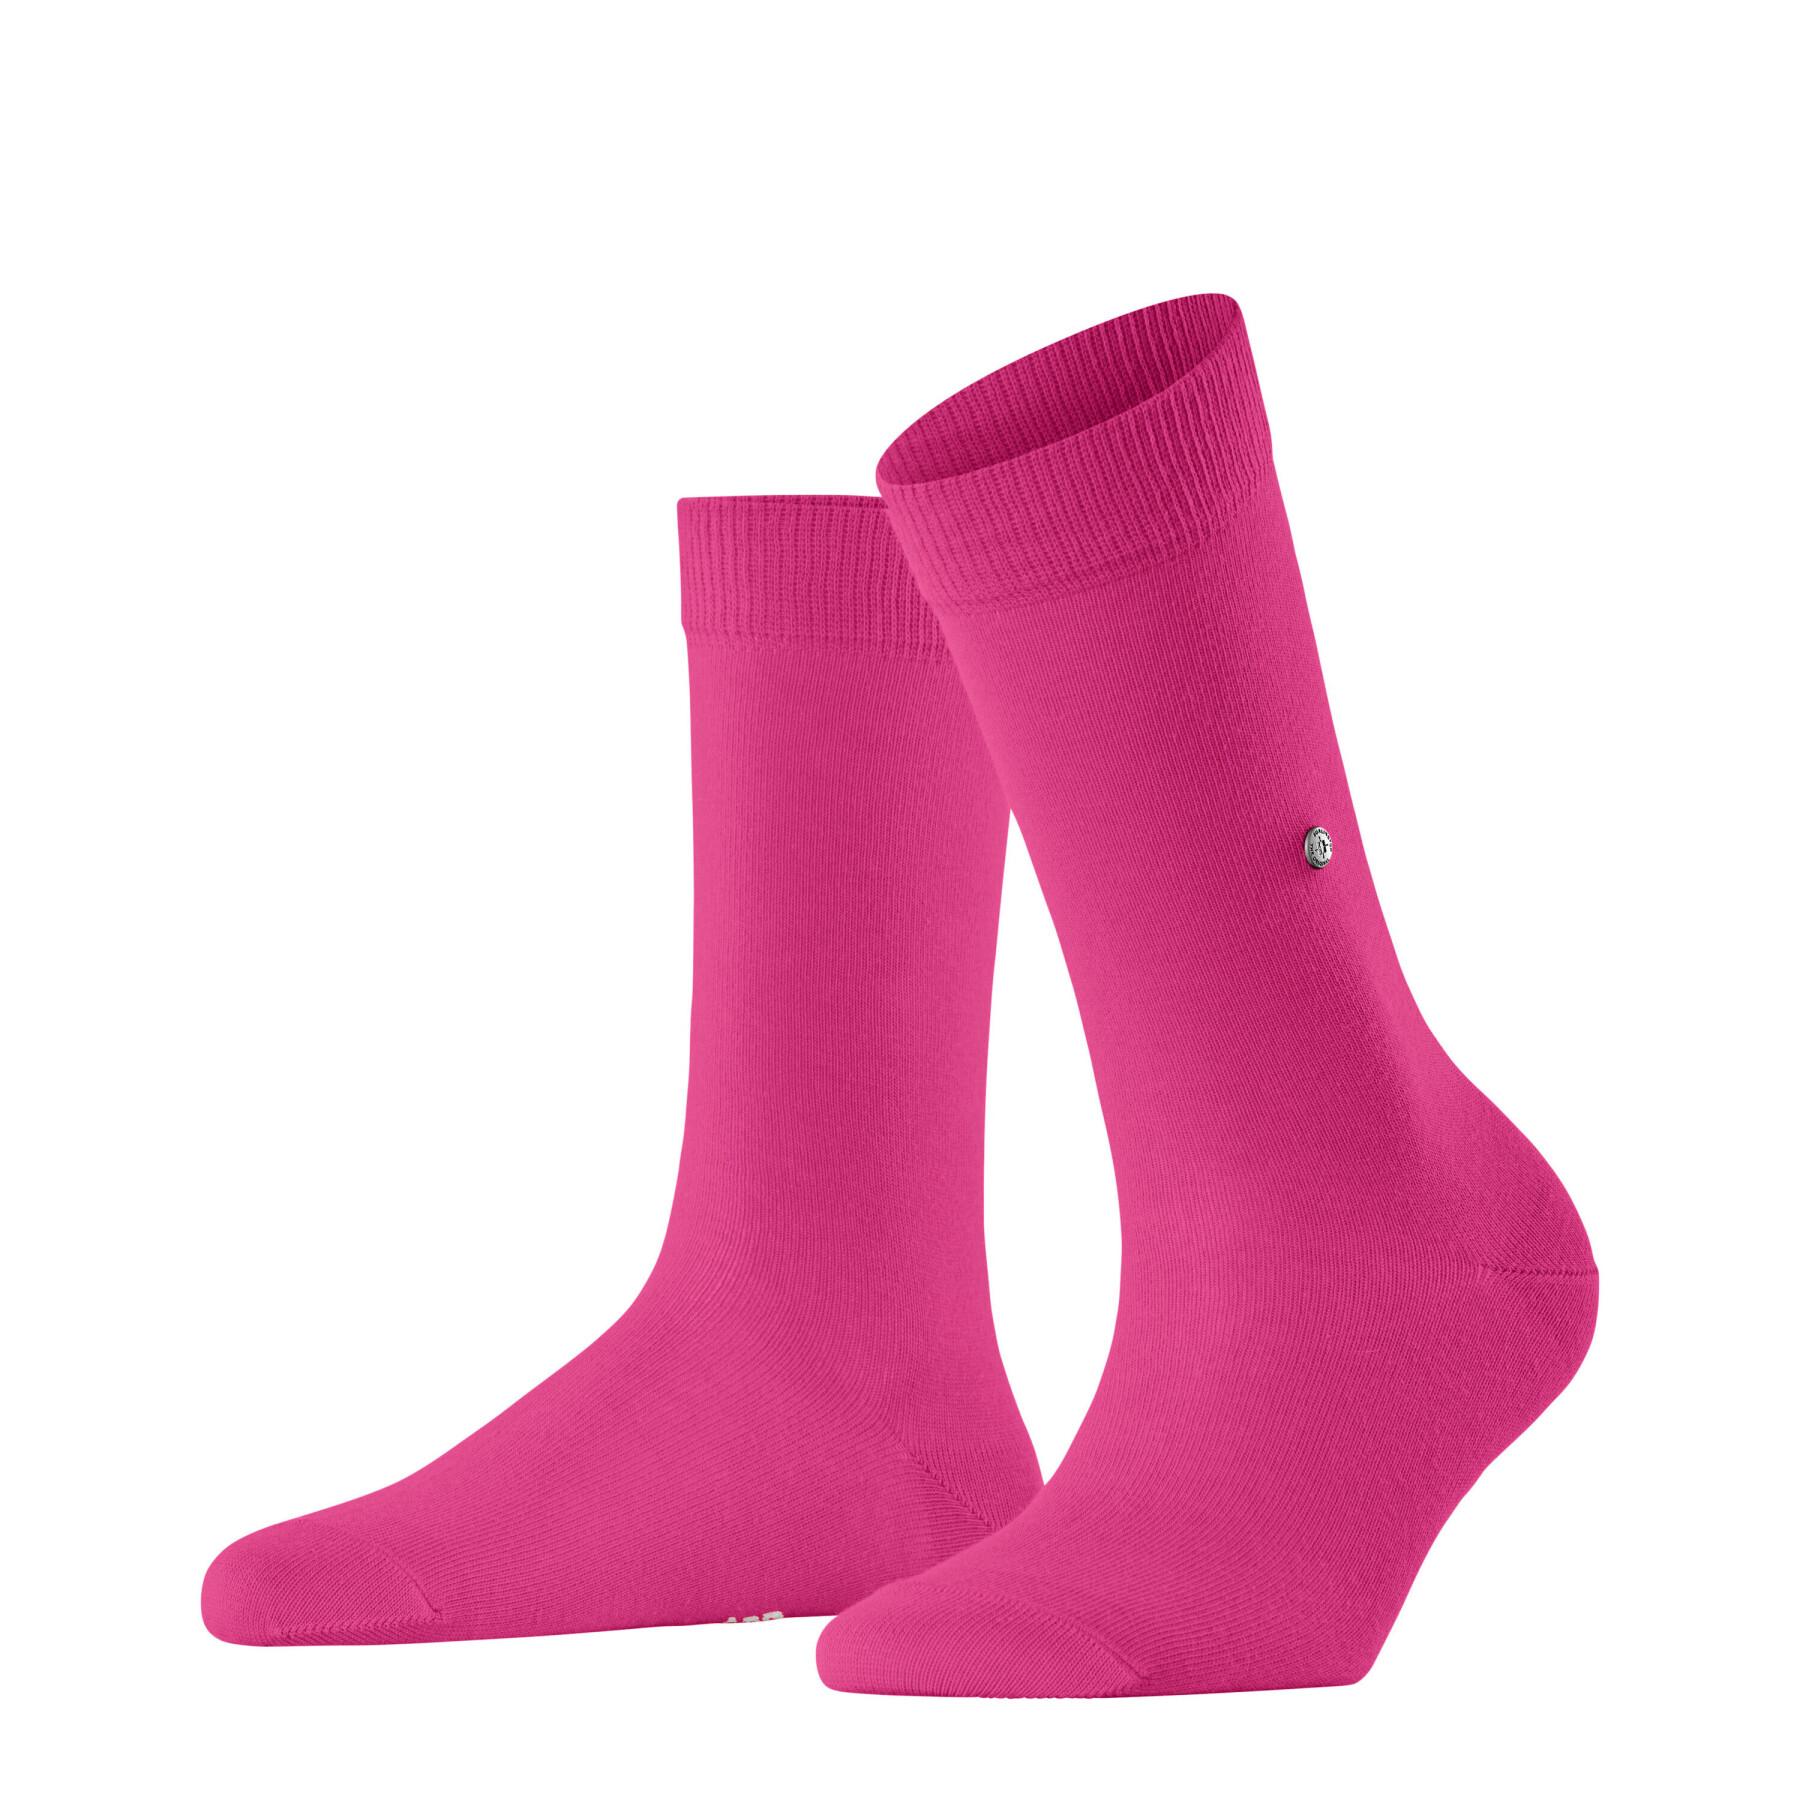 Women's socks Burlington Brit Style